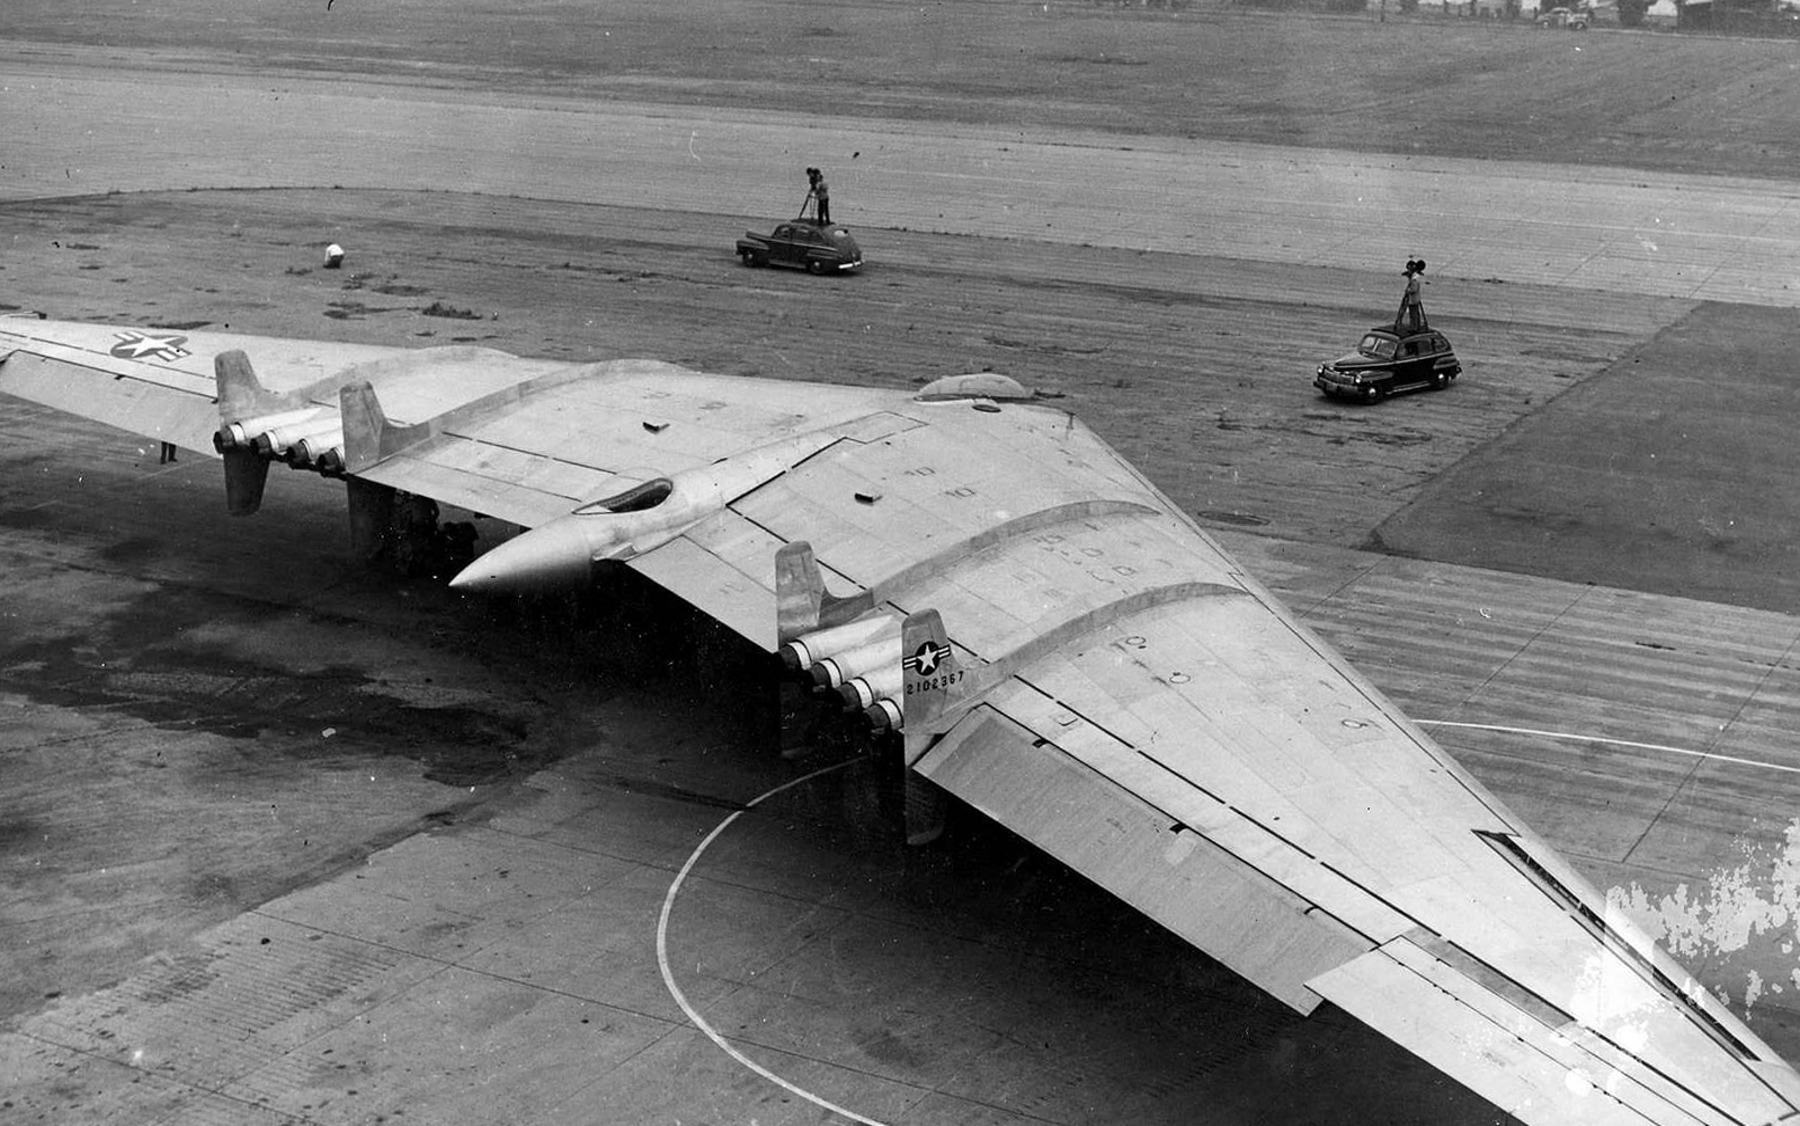 1947: Northrop YB-49 heavy turbojet bomber